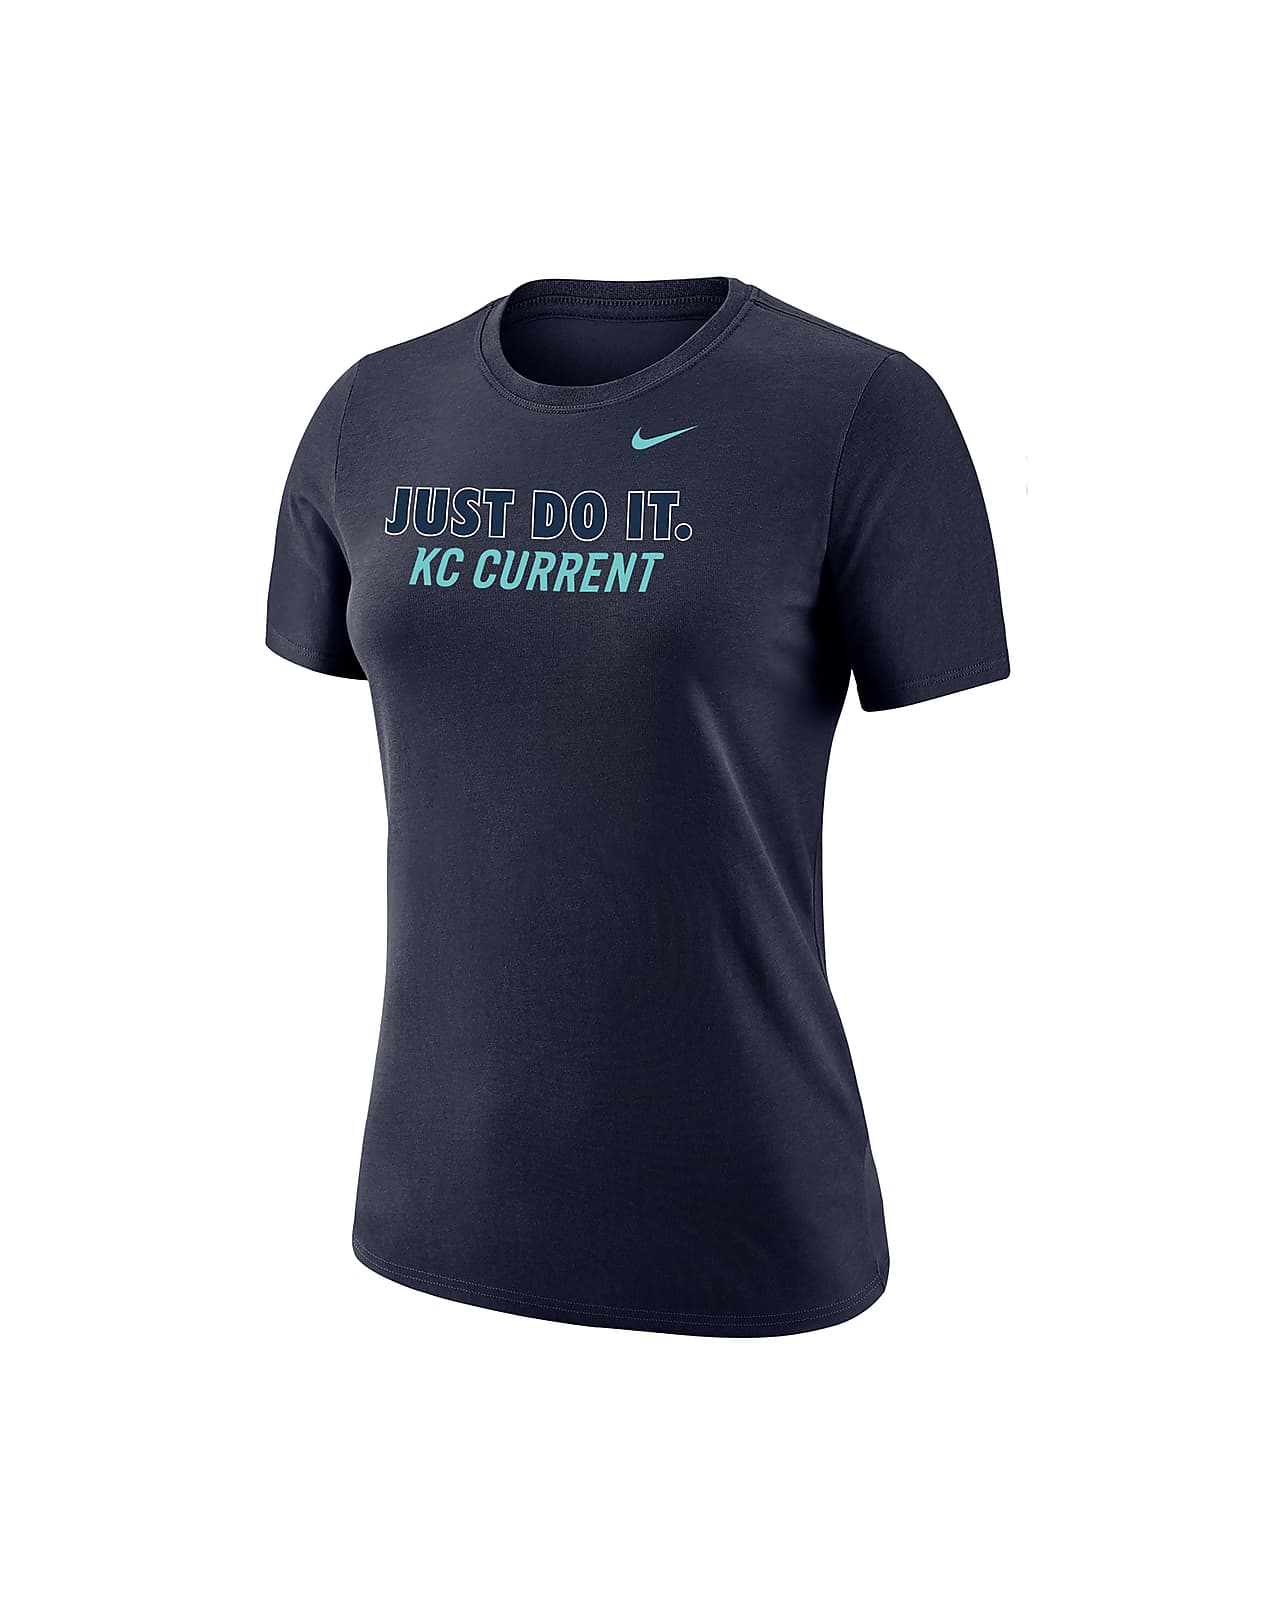 Kansas City Current Women's Nike Soccer T-Shirt